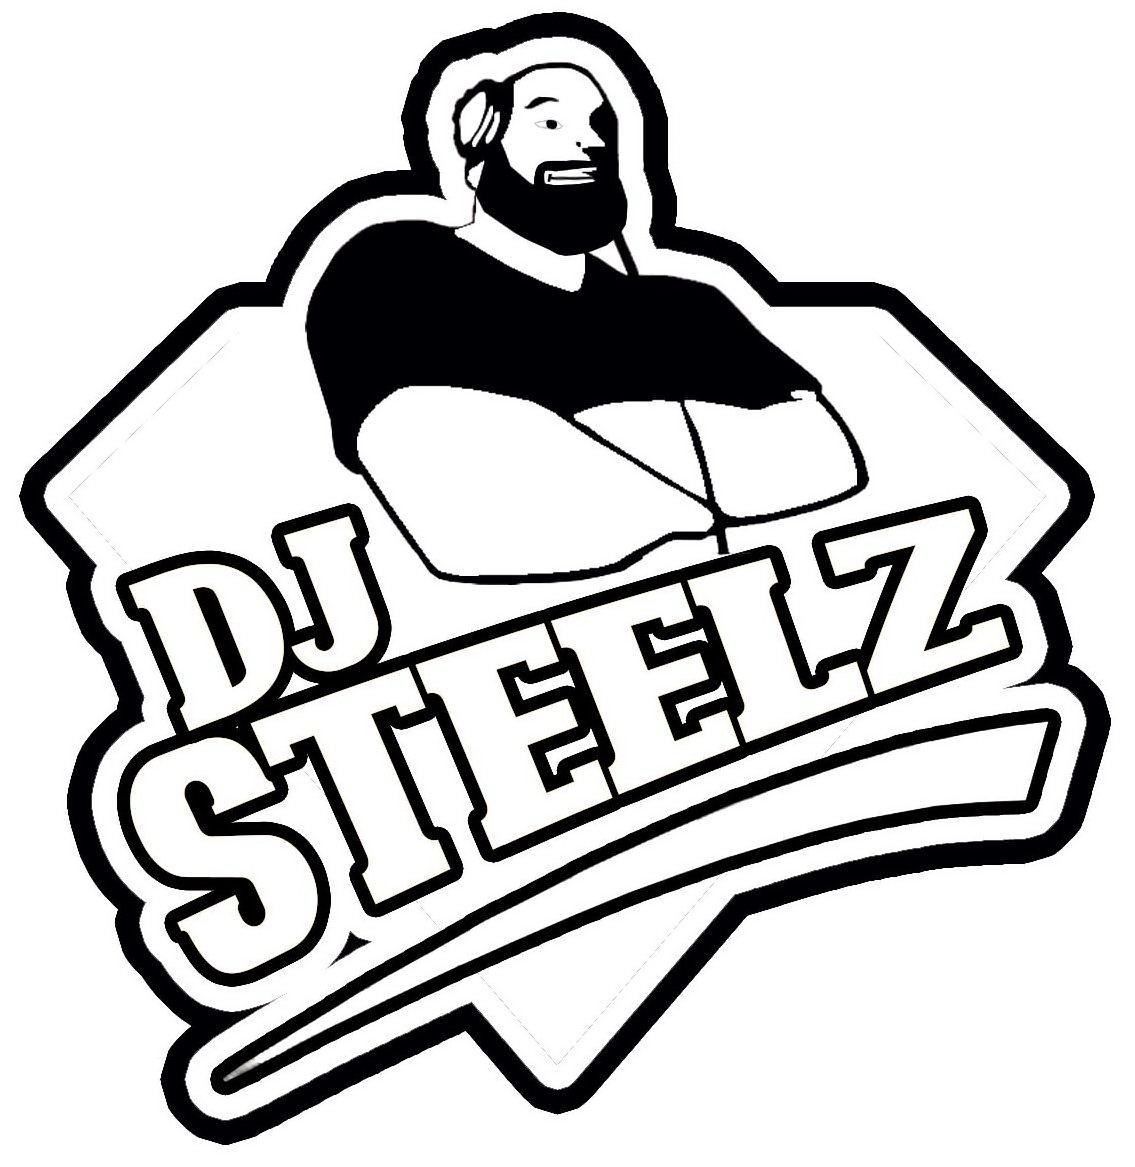  DJ STEELZ